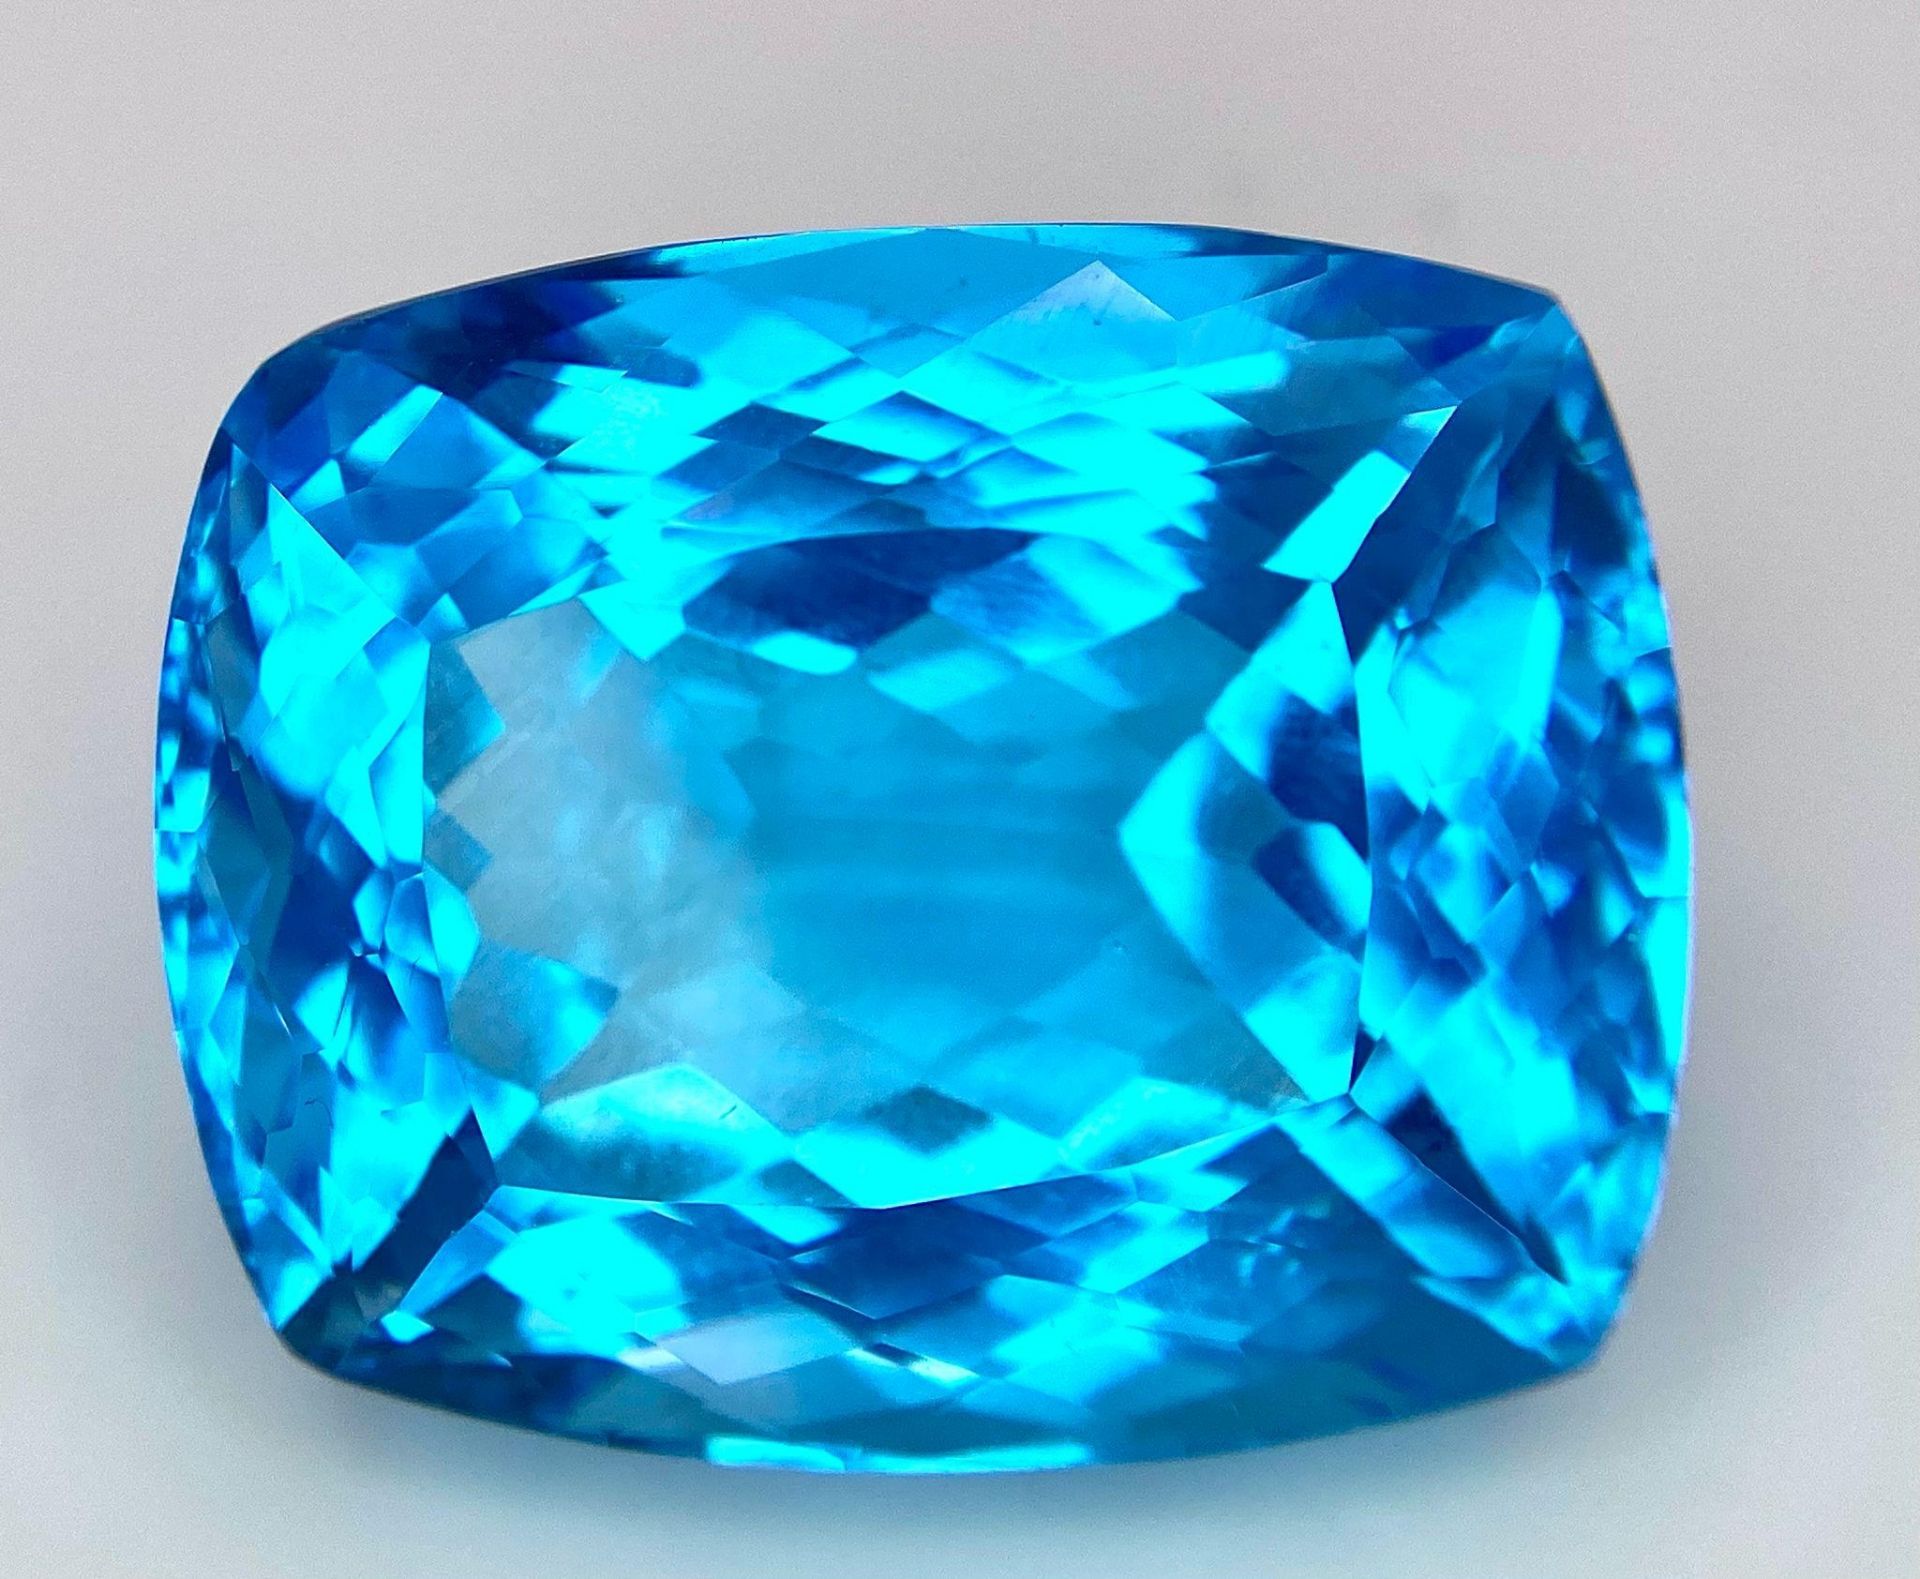 A Huge 142ct London Blue Topaz Natural Gemstone. Rectangular cushion cut. 33mm x 28mm. No visible